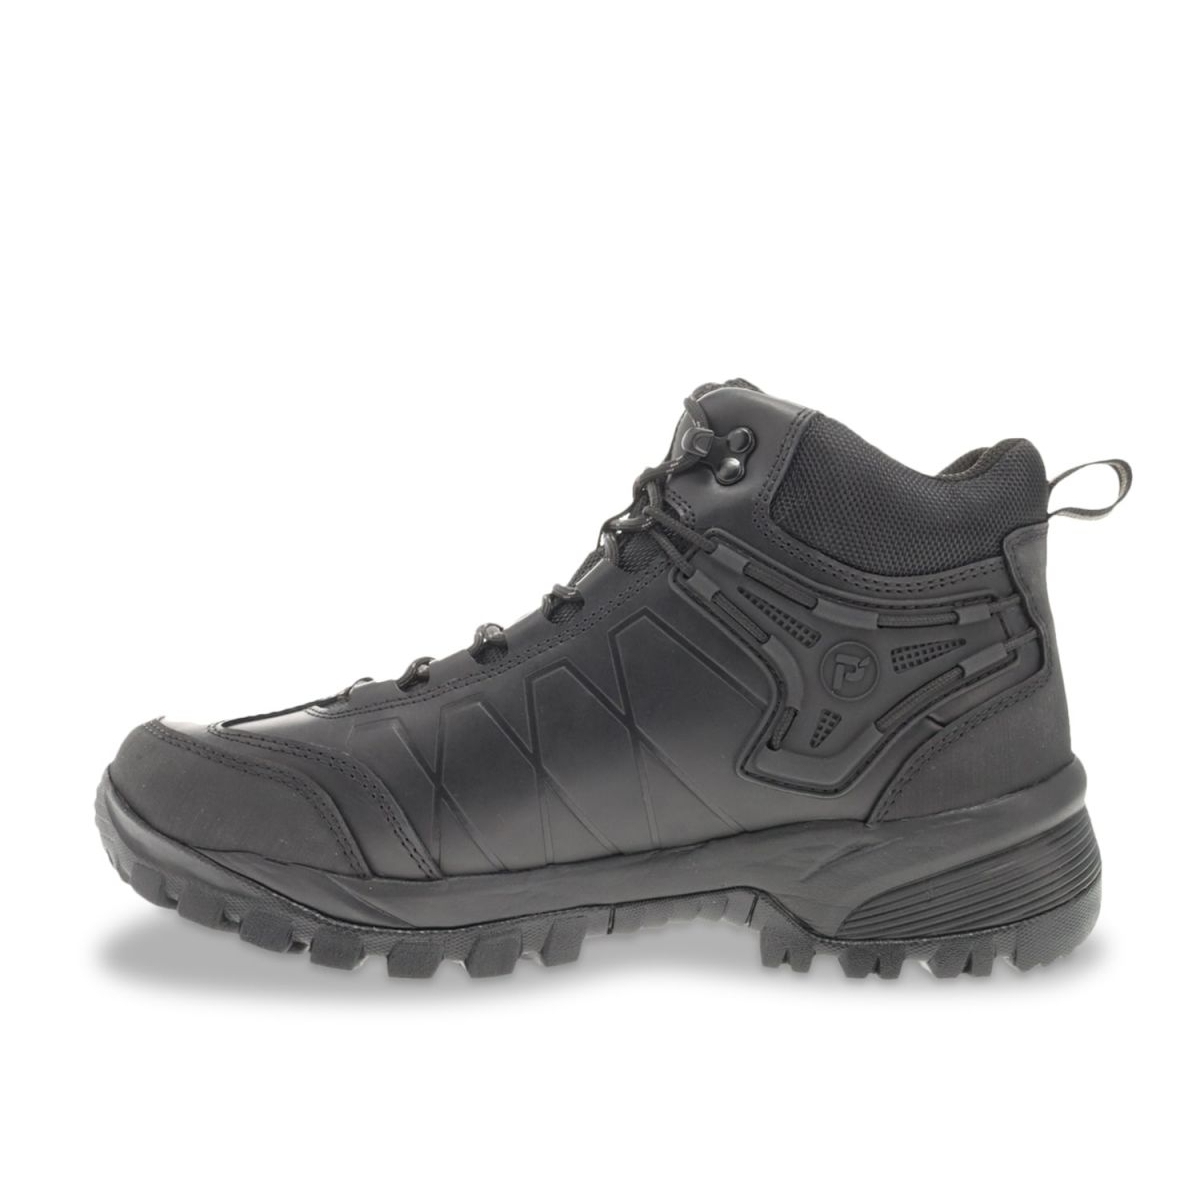 Propet Men's Ridge Walker Force Hiking Boots Black - MBA052LBLK BLACK - BLACK, 13 X-Wide